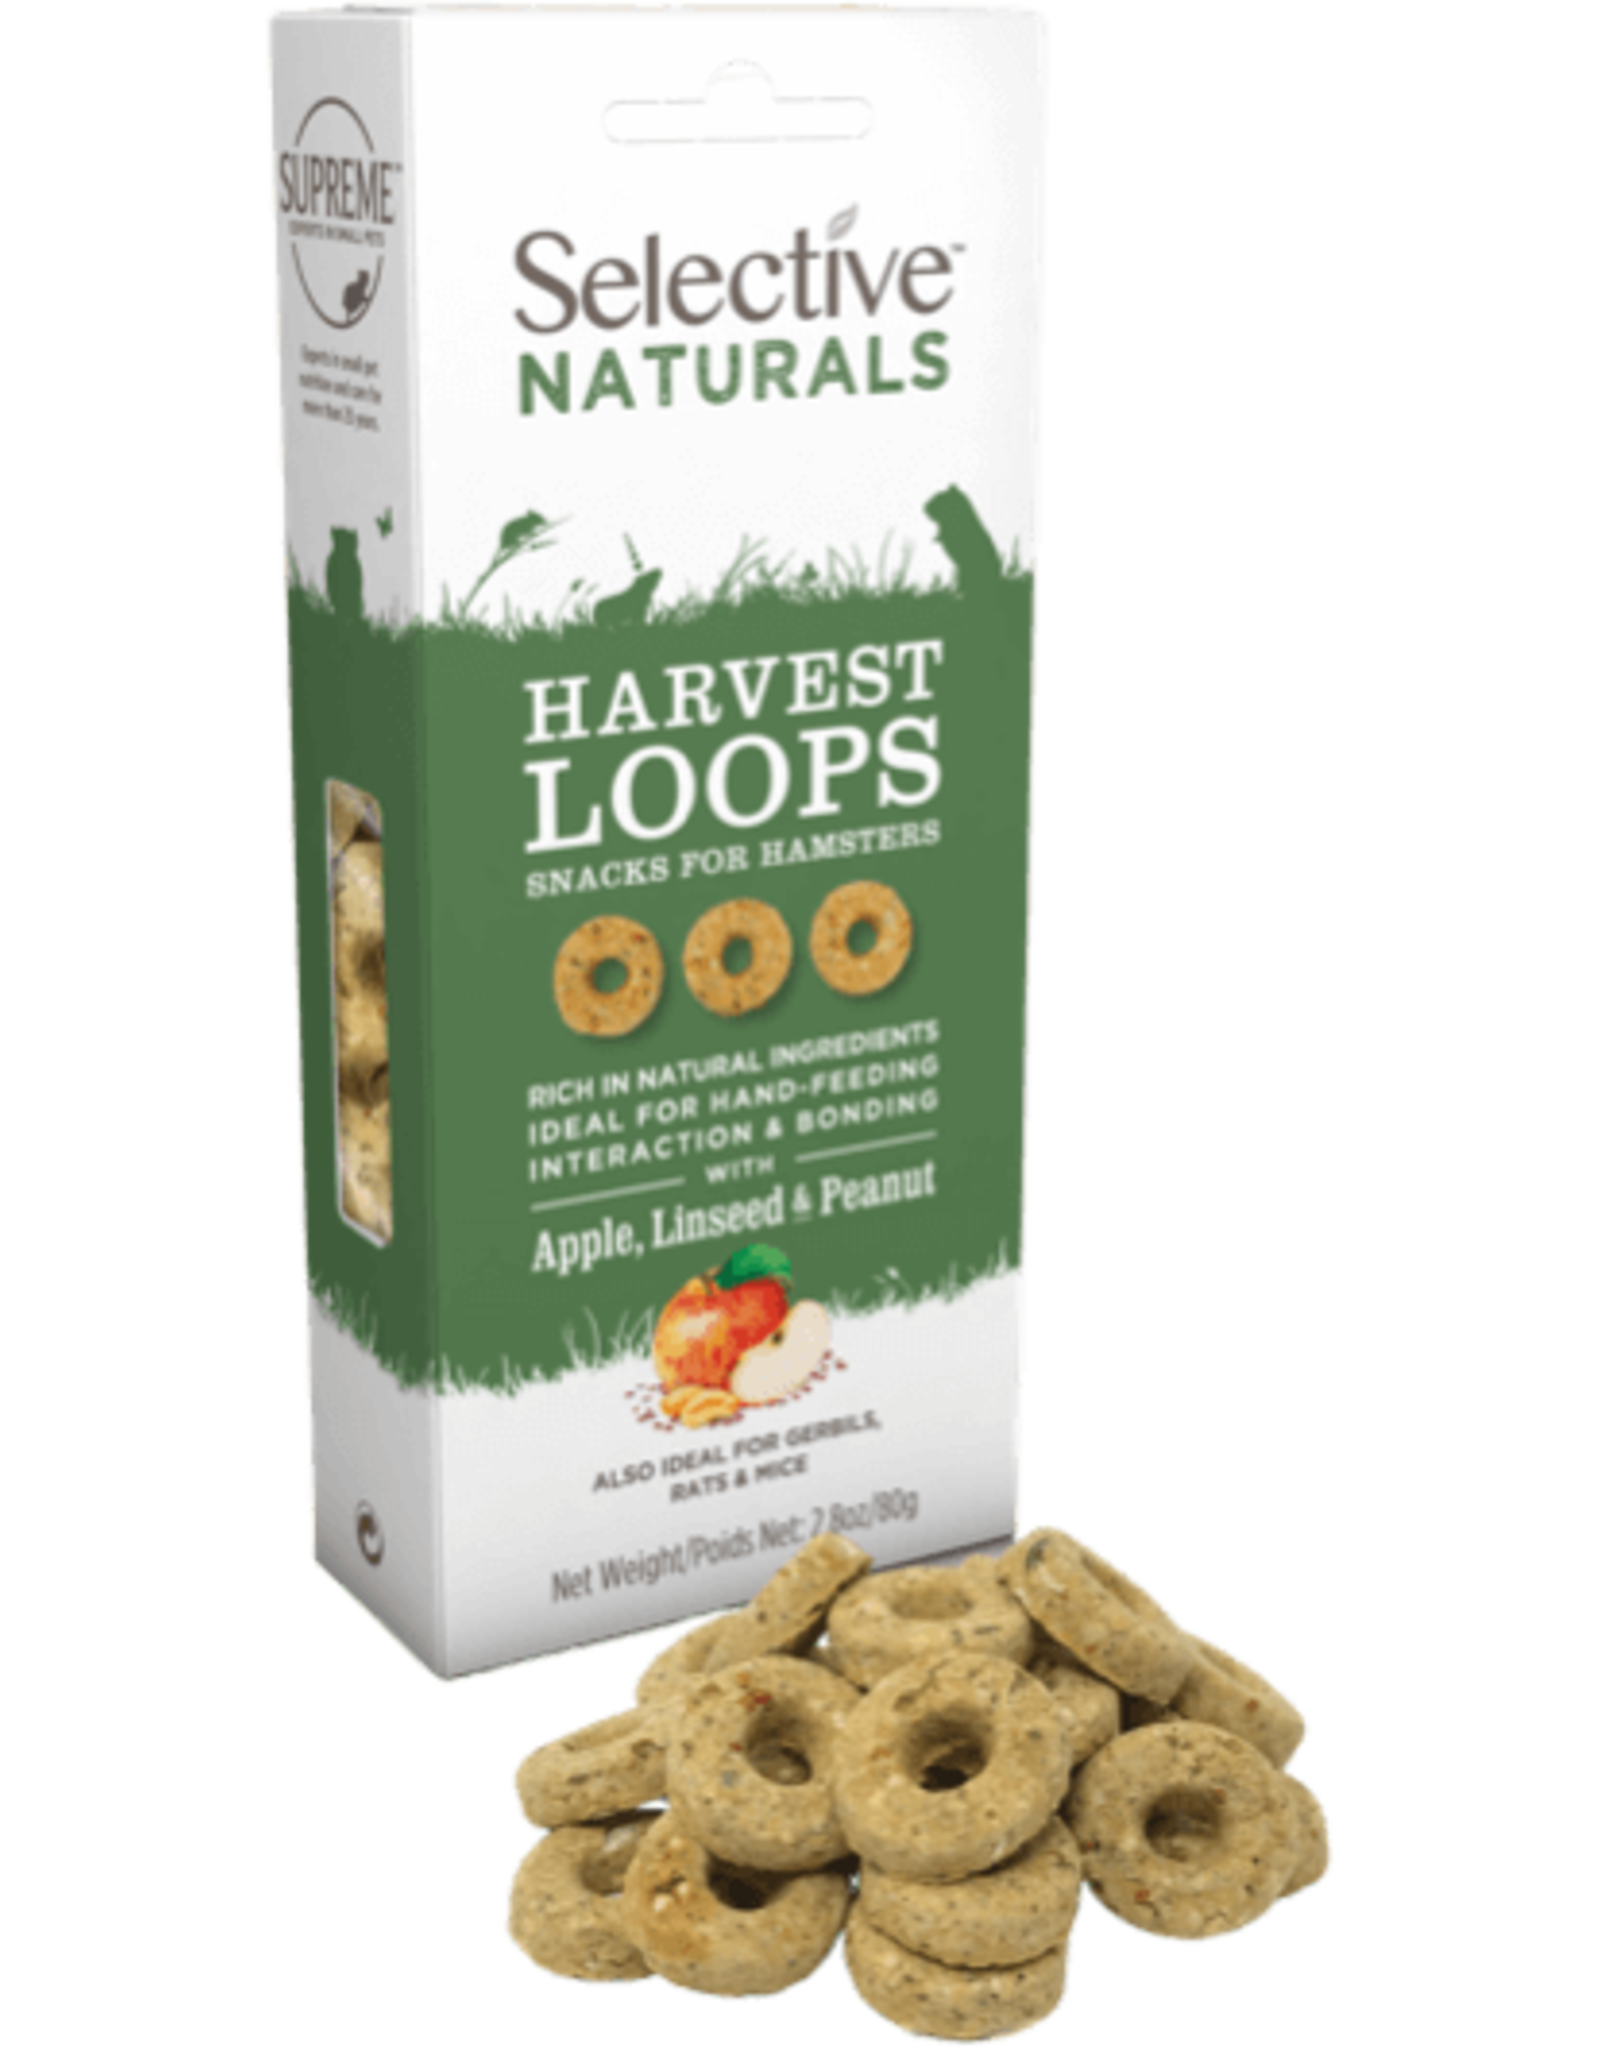 Supreme Pet Foods SELECTIVE NATURALS Harvest Loops Hamster Treats Apple, Linseed & Peanut